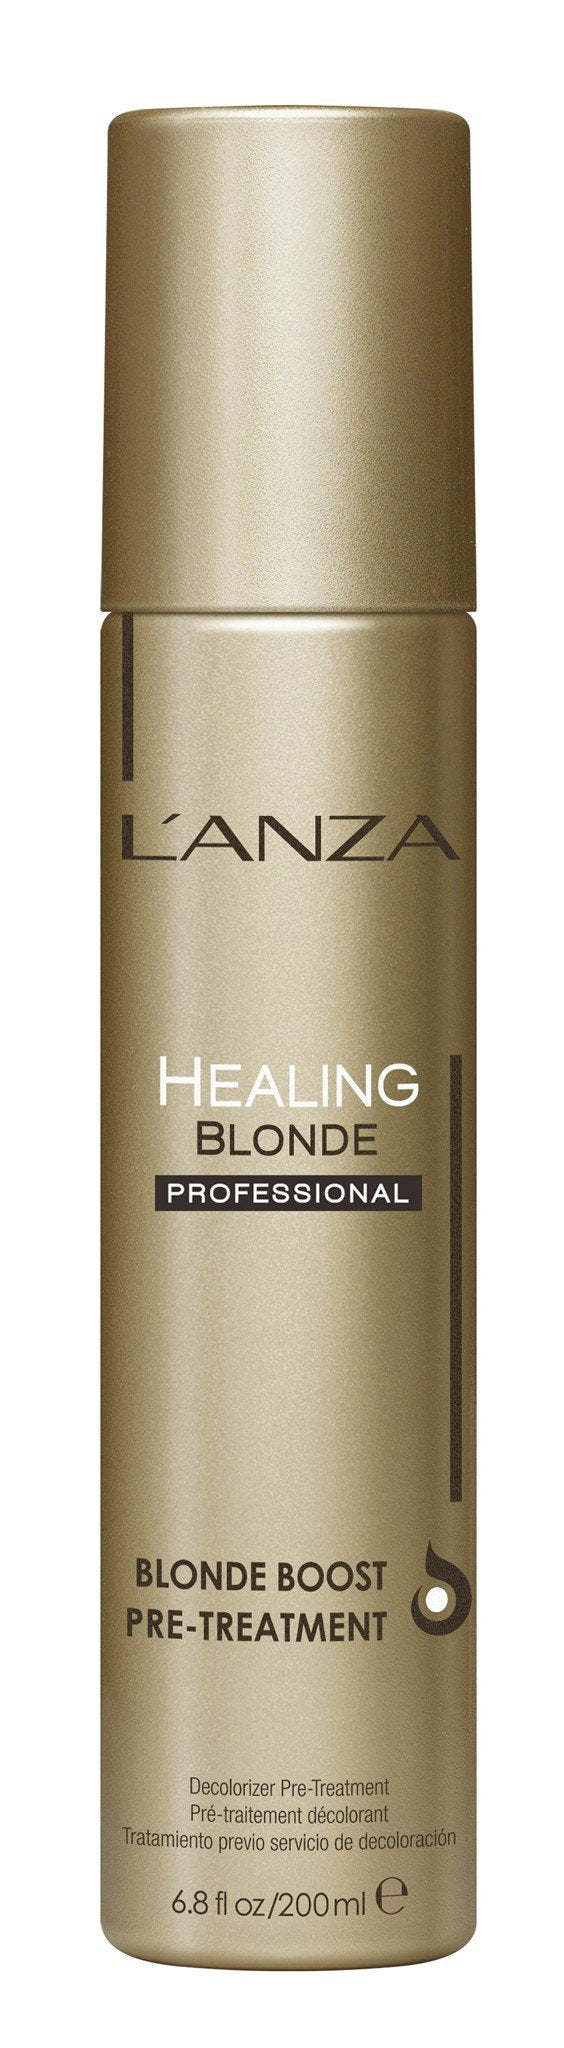 Lanza Blonde Boost Pre-Treatment 200ml